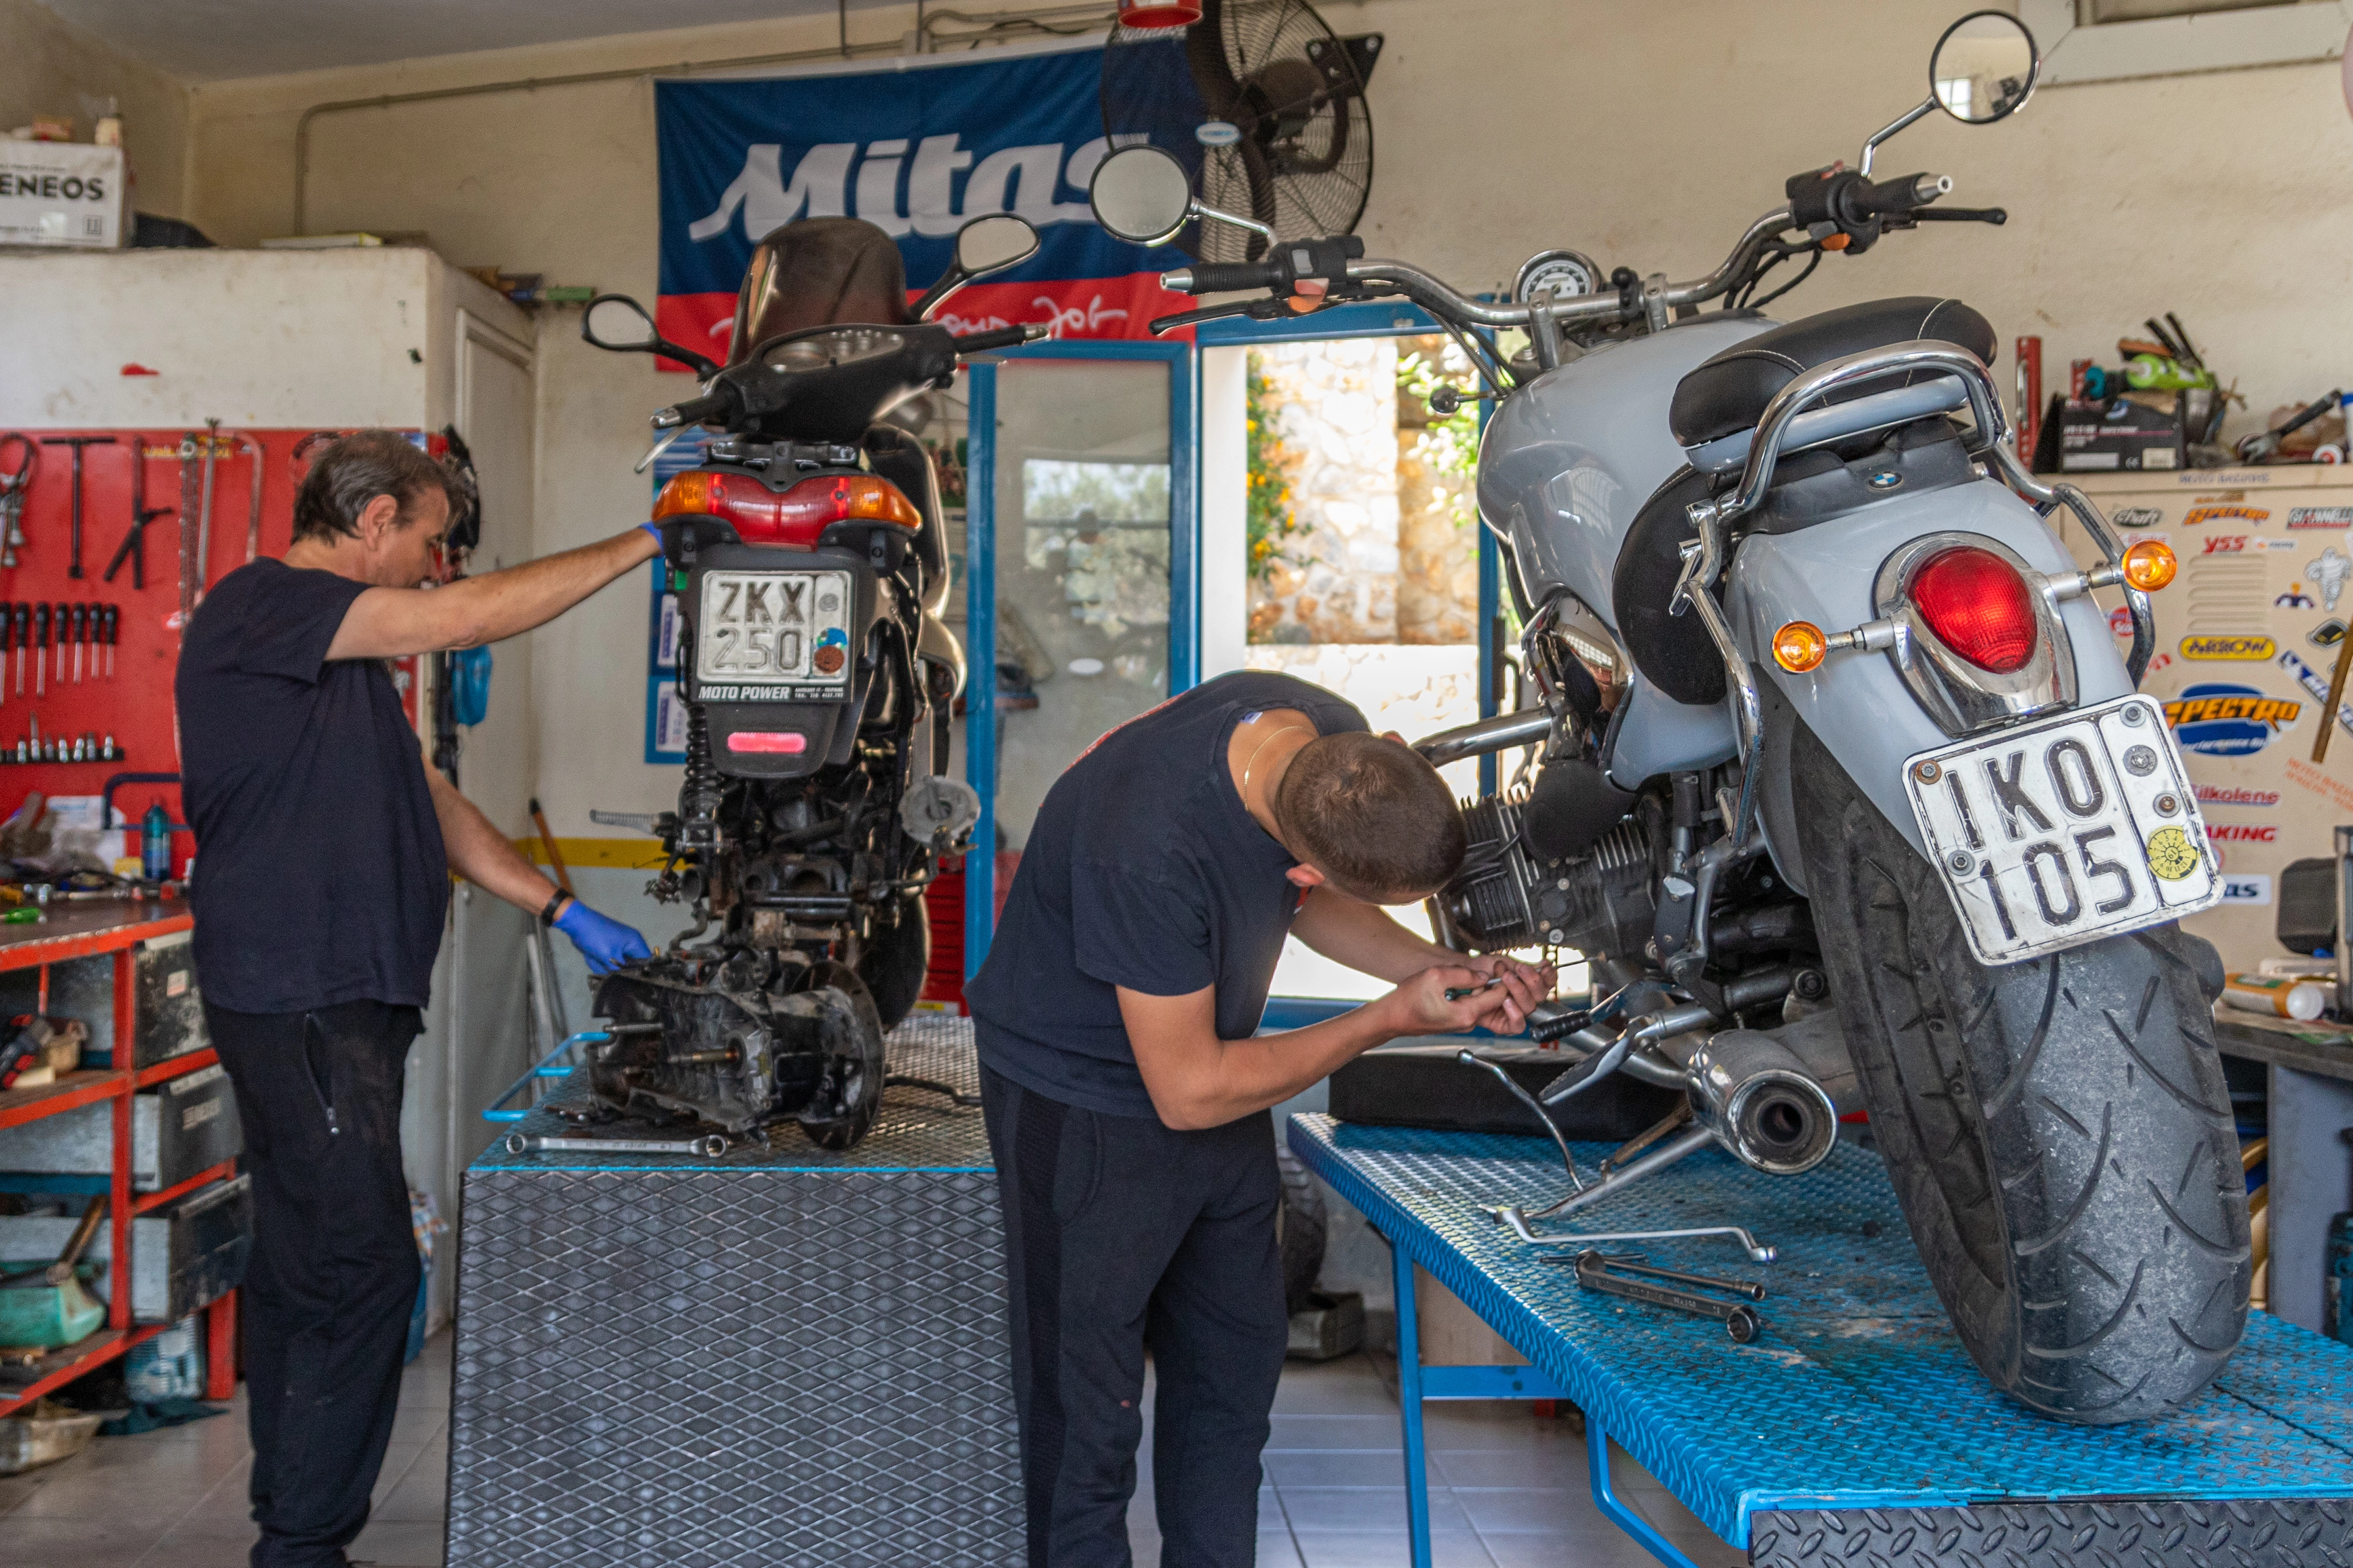 Moto Vasilis crew repairing two motorcycles